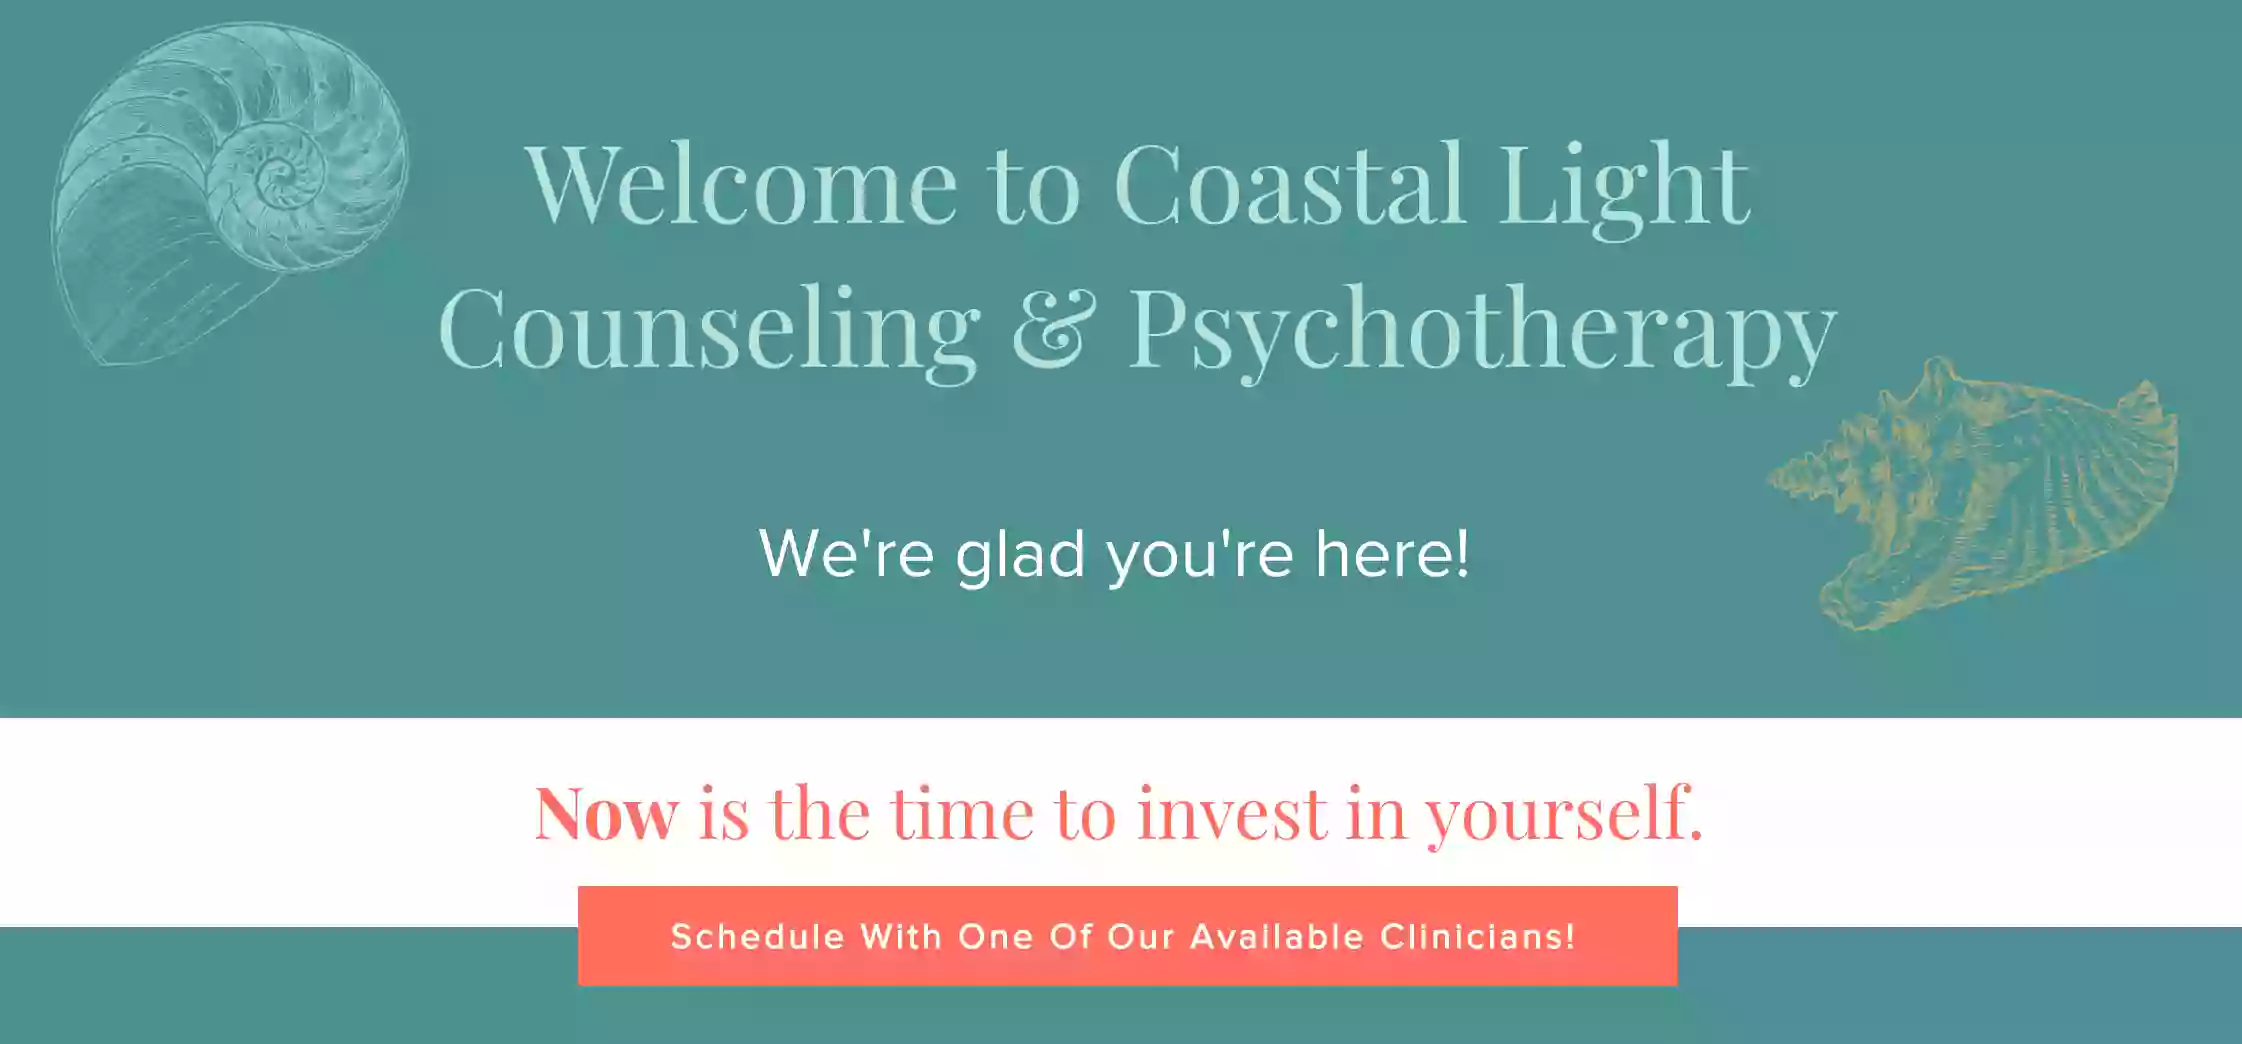 Coastal Light Counseling & Psychotherapy